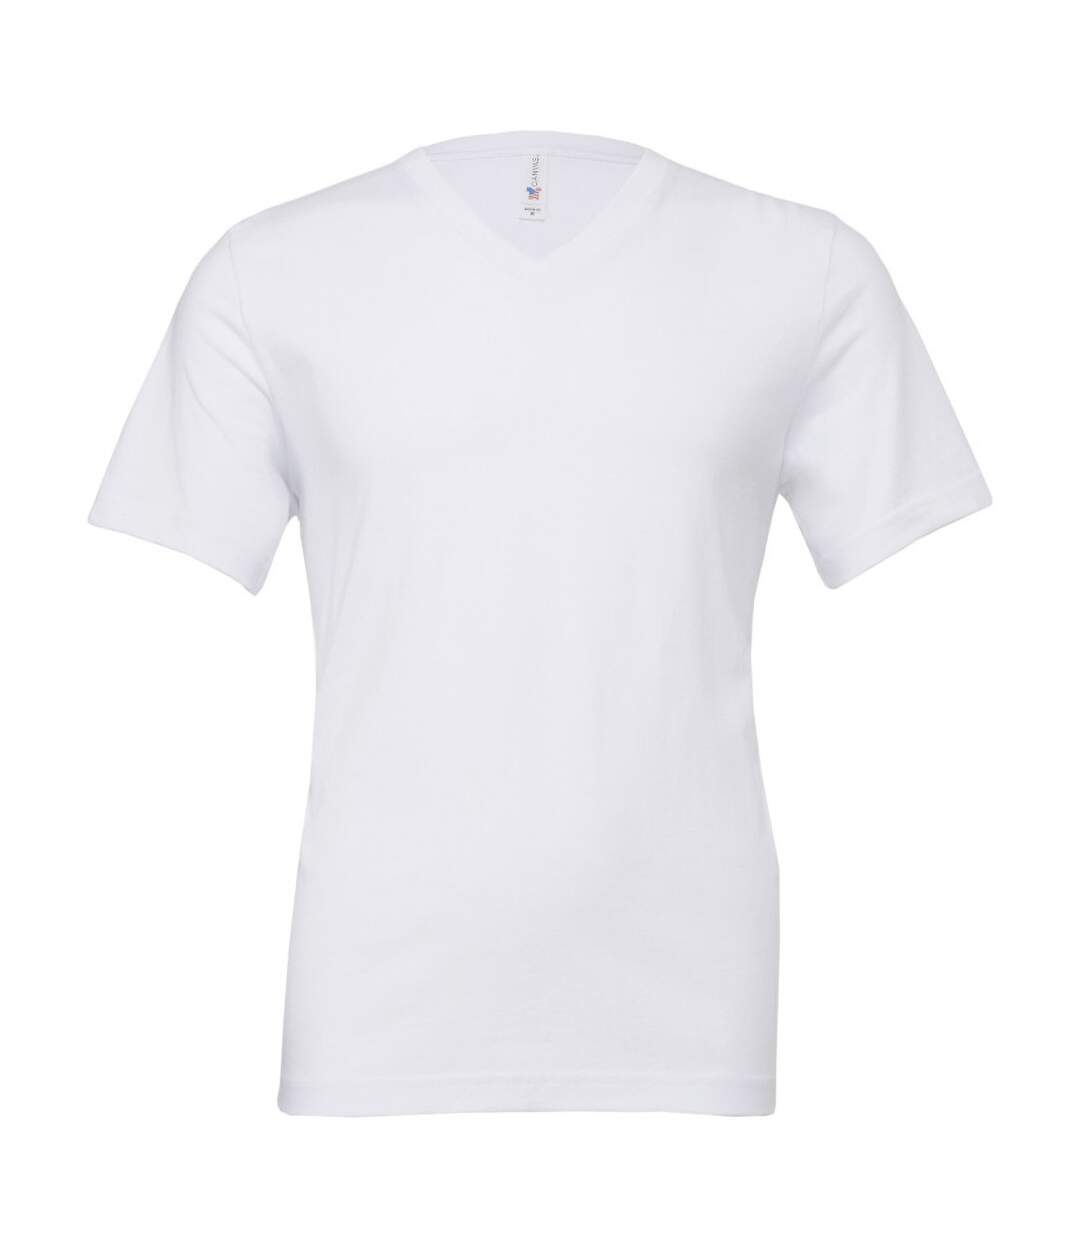 Canvas Mens Jersey Short Sleeve V-Neck T-Shirt (White) - UTBC2595